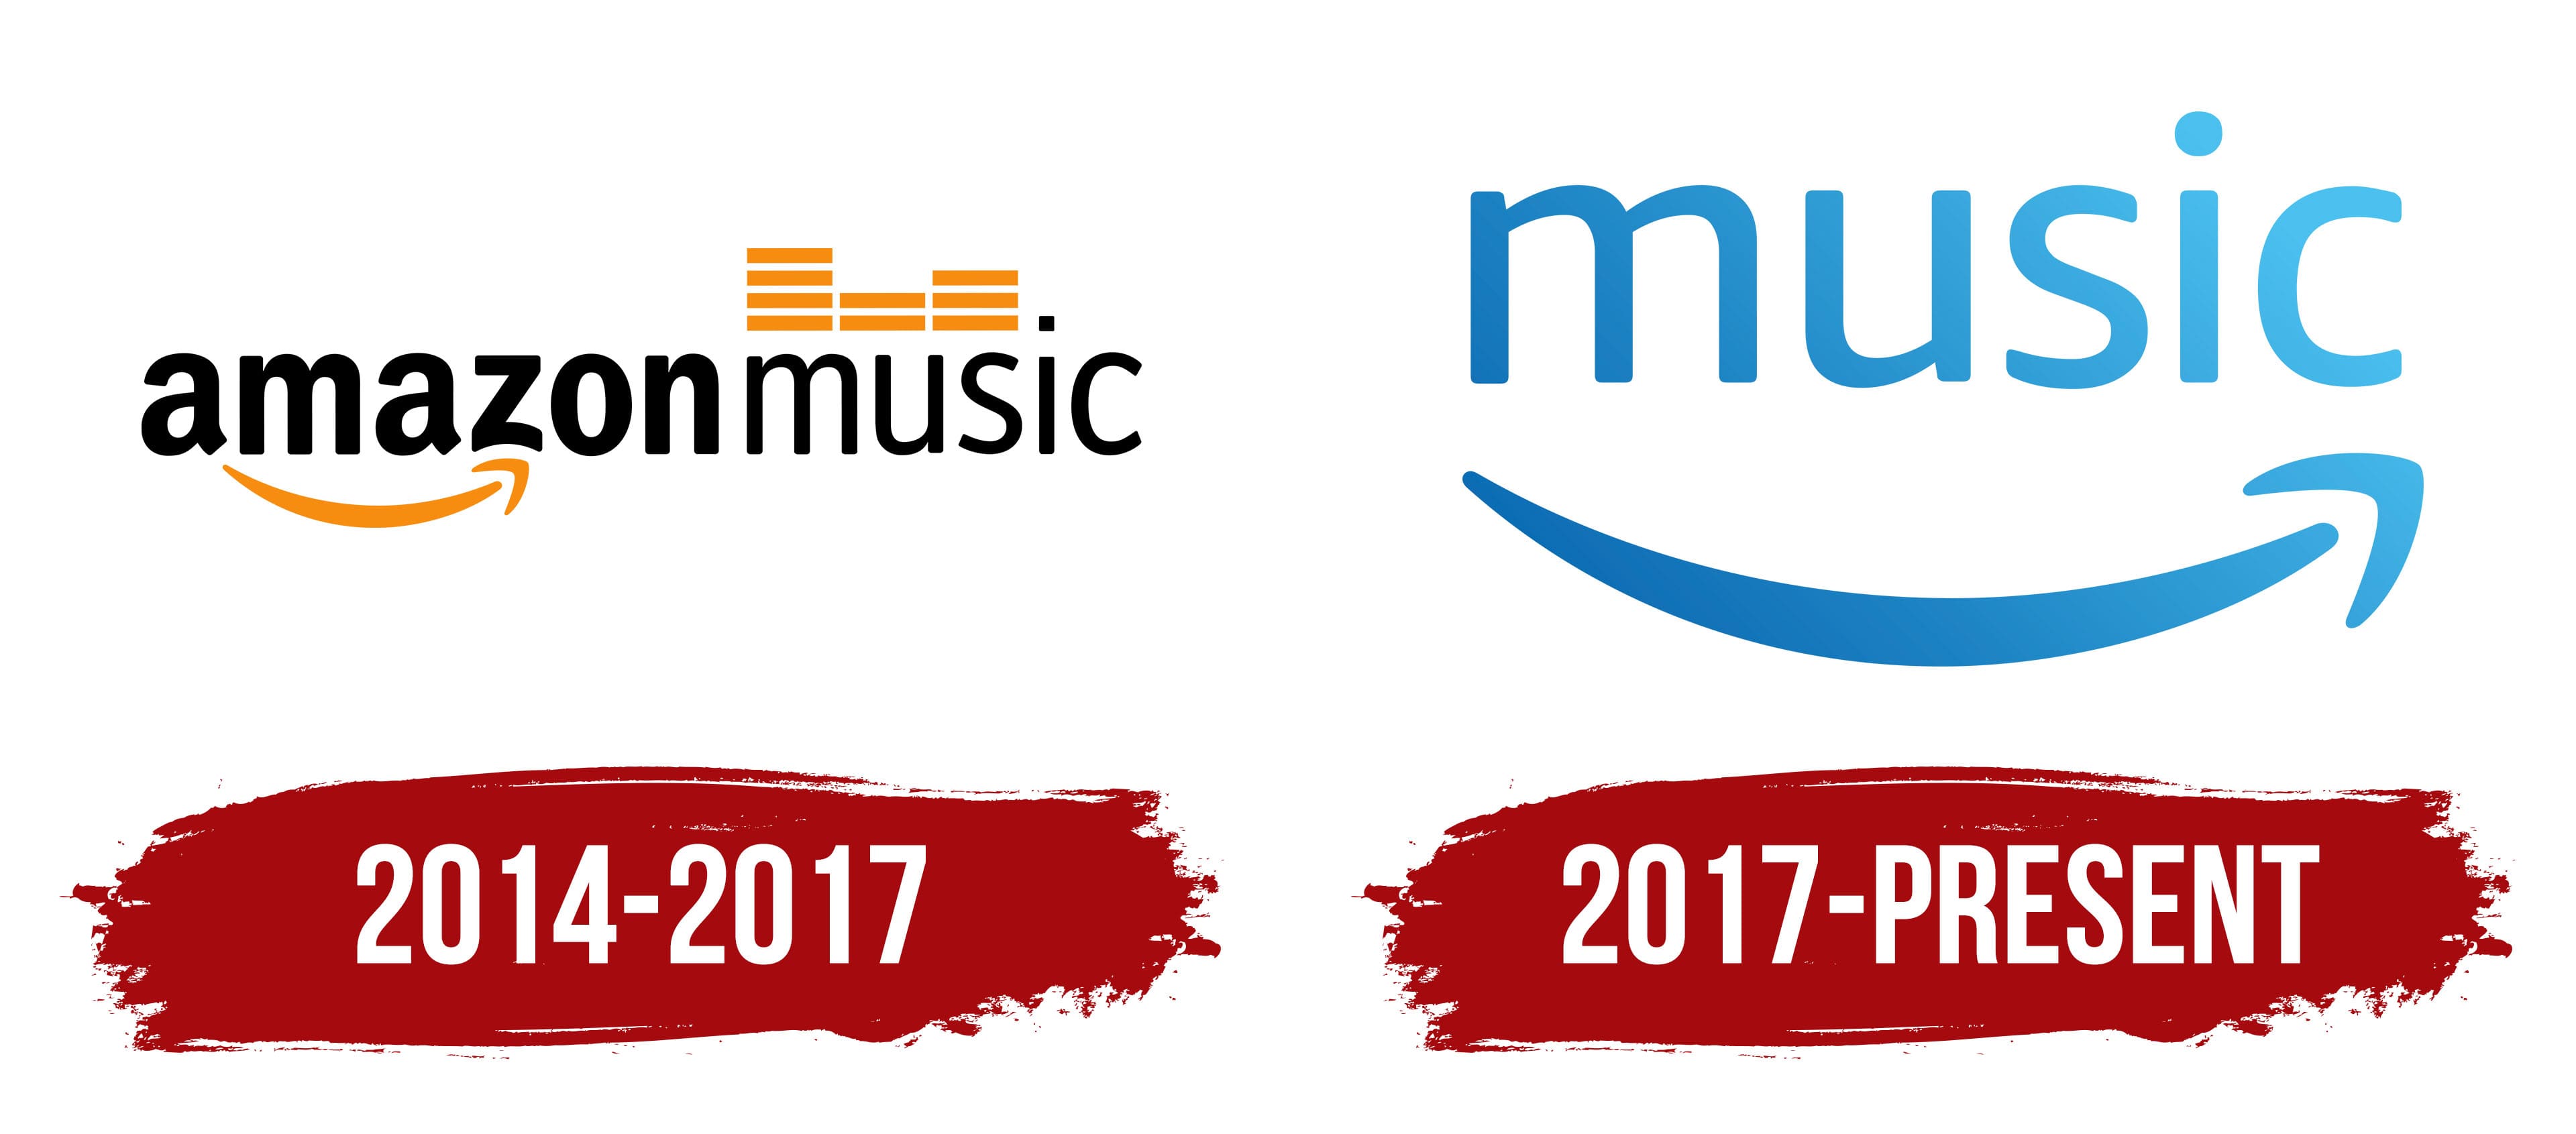 Cancel Amazon Music Unlimited Subscription - Amazon Customer Service